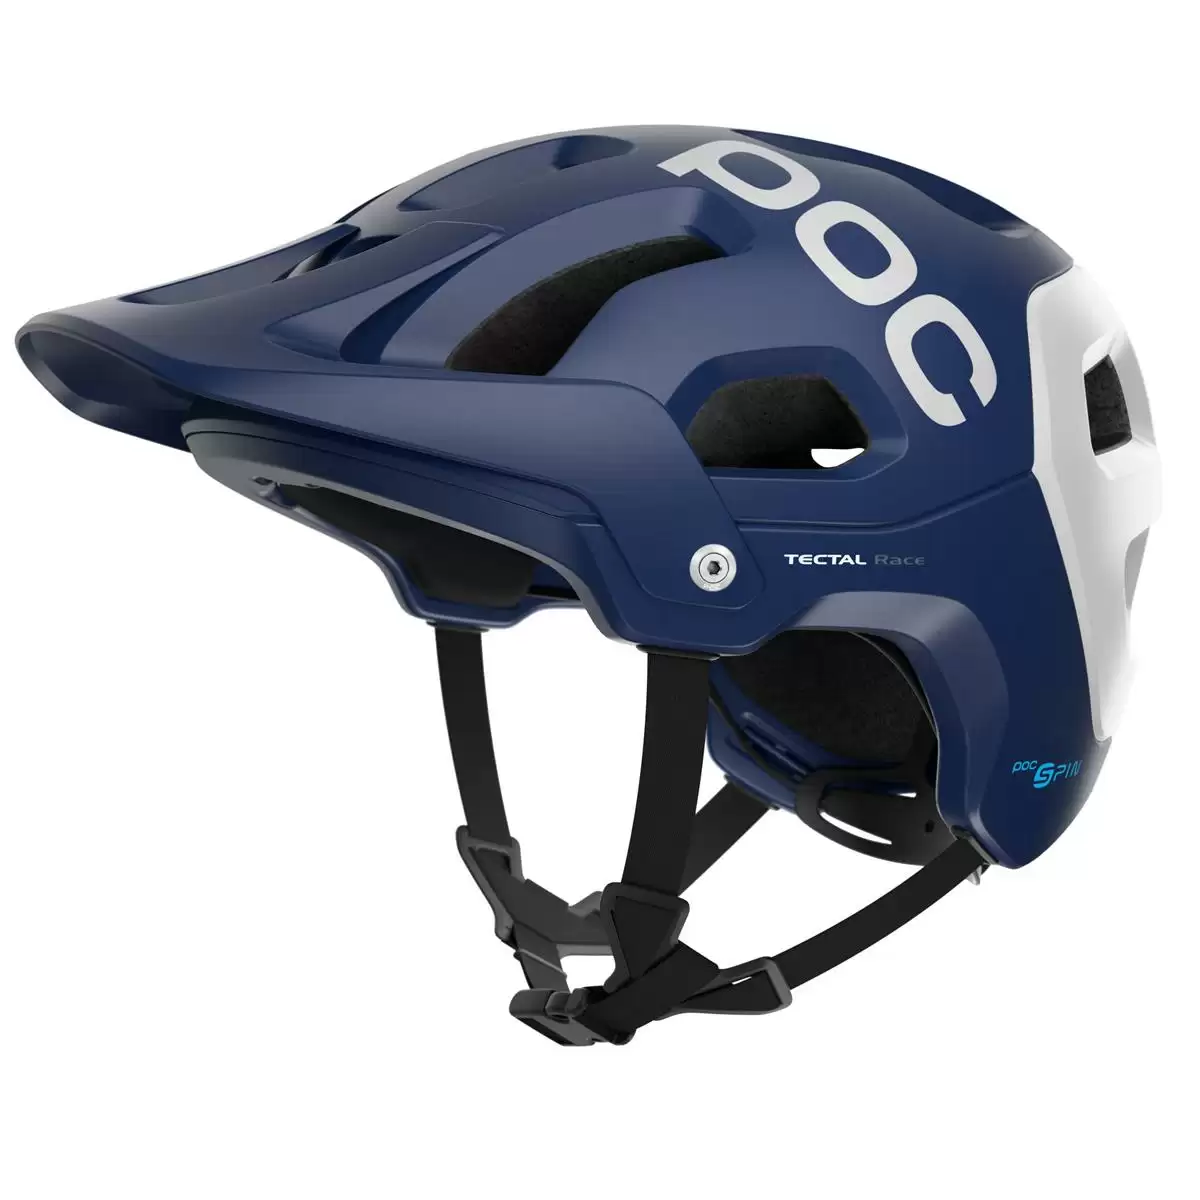 Enduro helmet Tectal Race Spin blue size M-L (55-58cm) - image